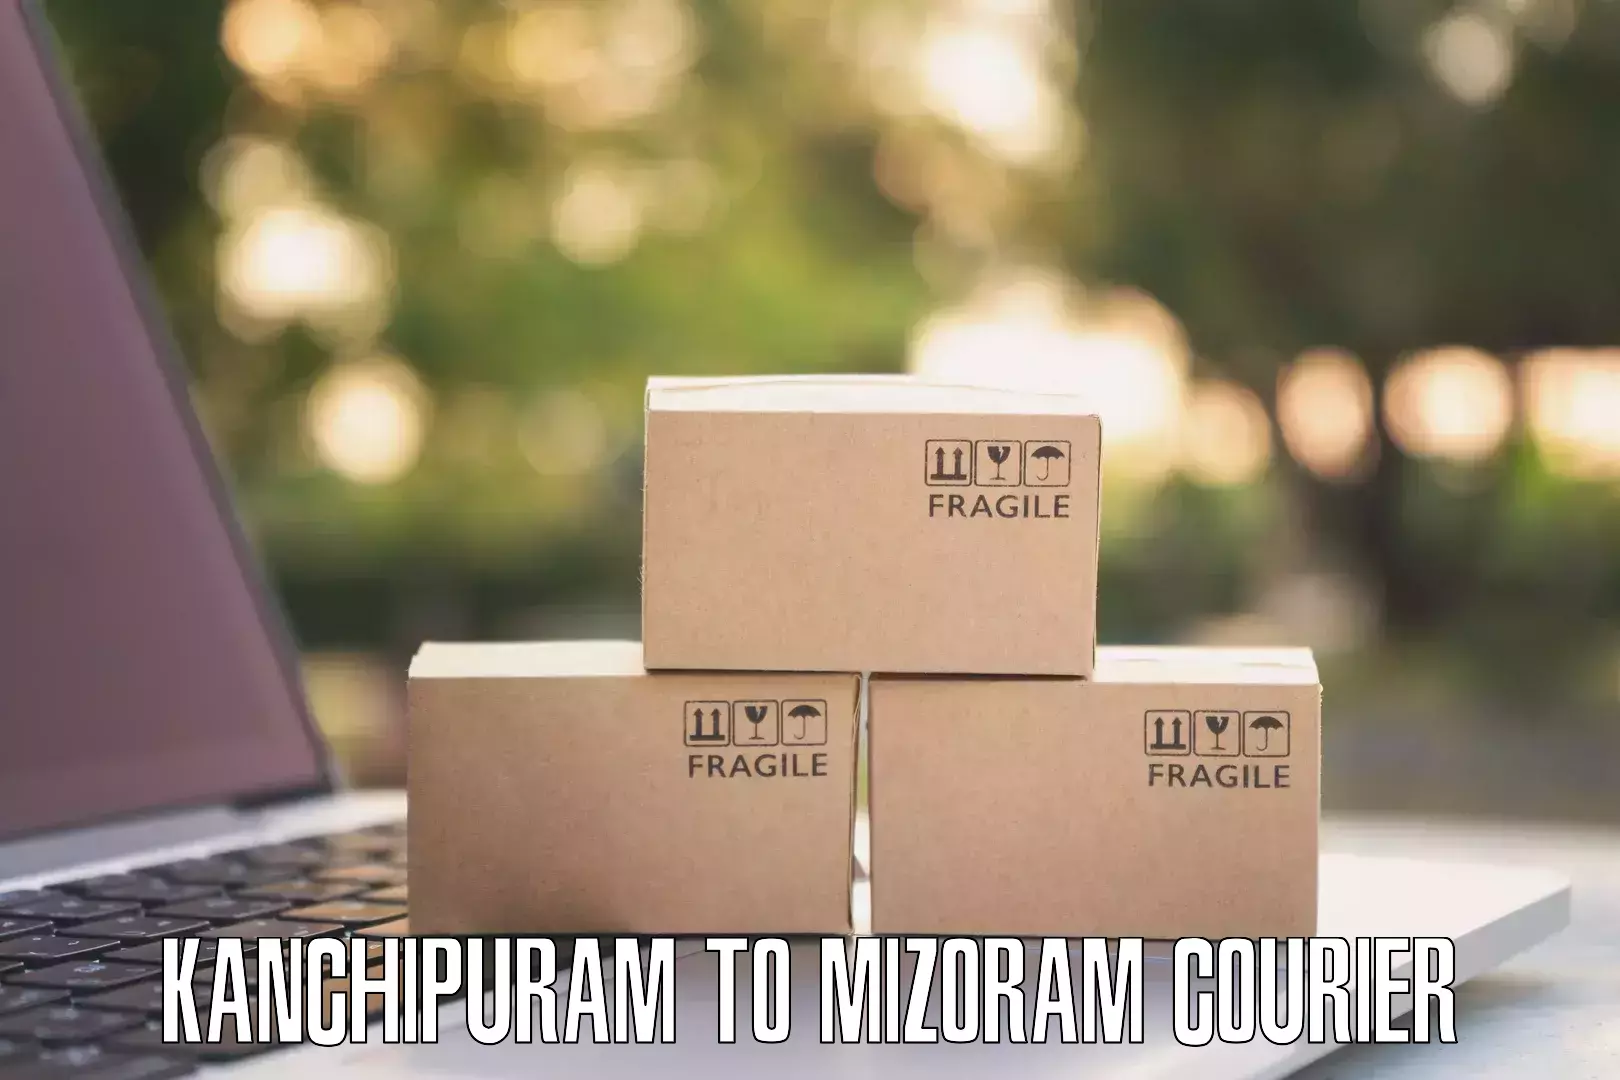 Next-generation courier services Kanchipuram to Thenzawl